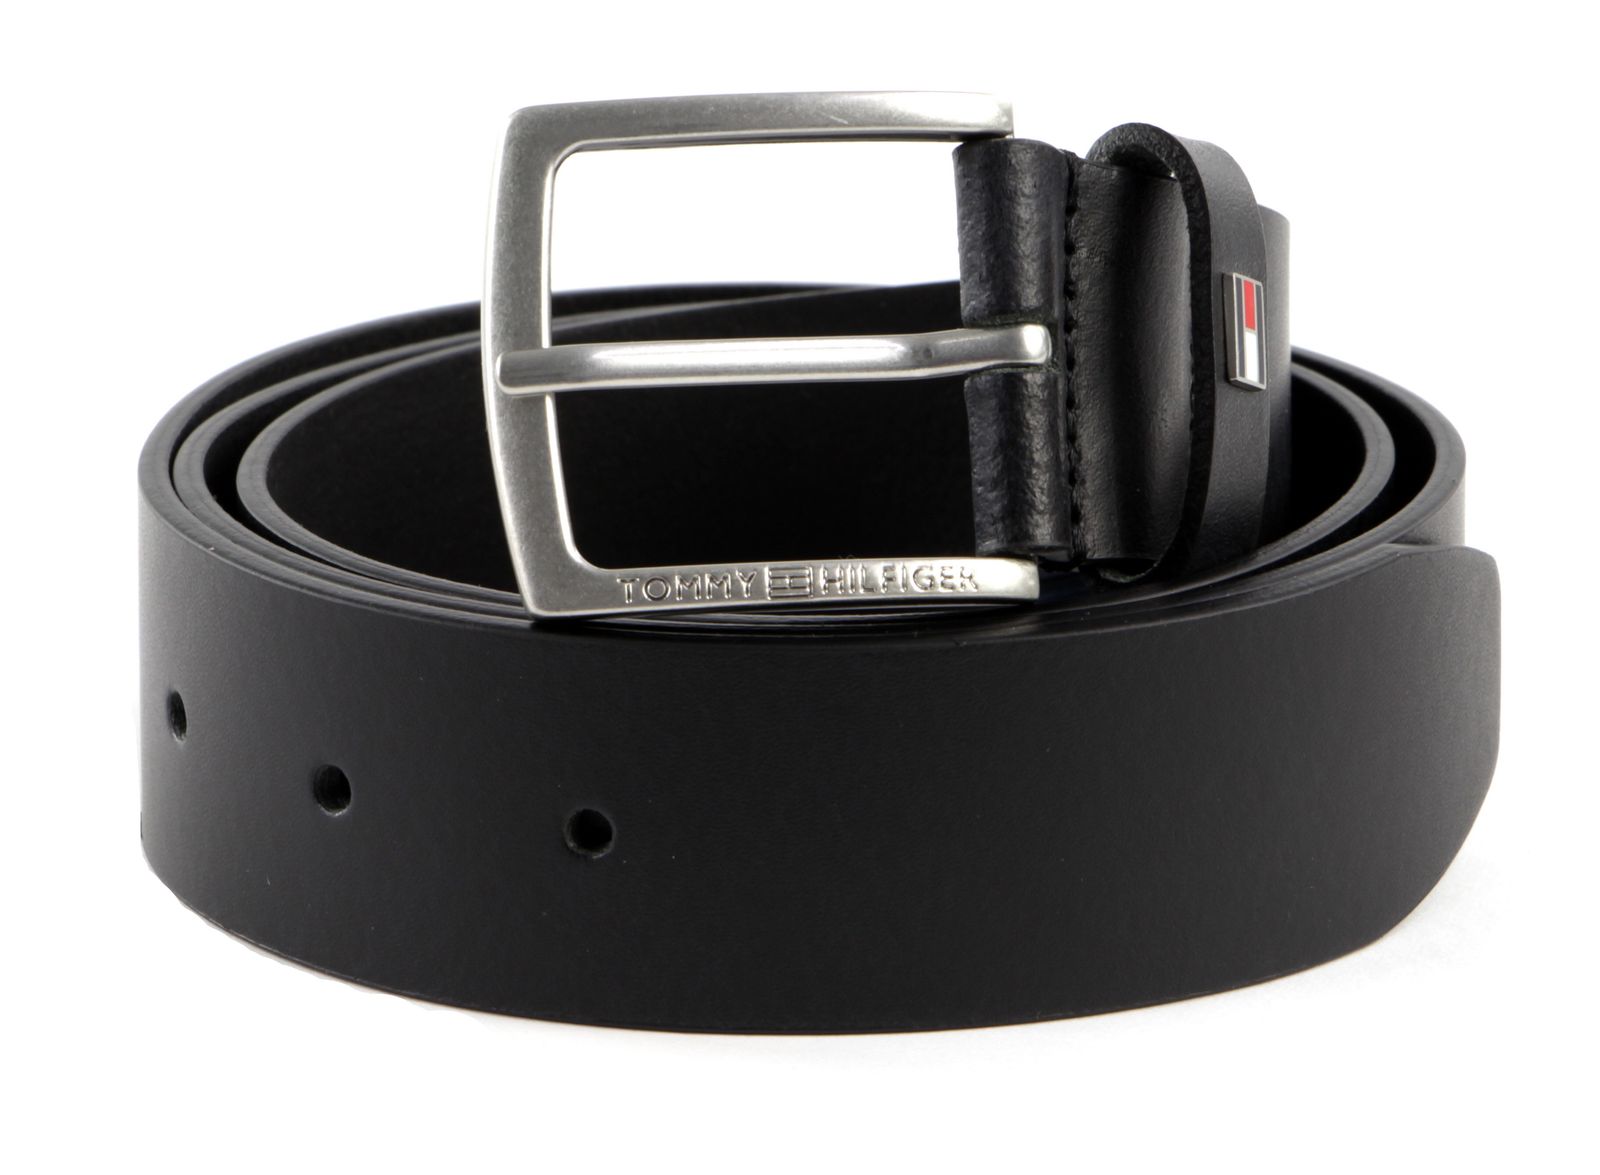 TOMMY HILFIGER Casual W90 Belt Leather Black Accessoire Gürtel G 3.5 | eBay